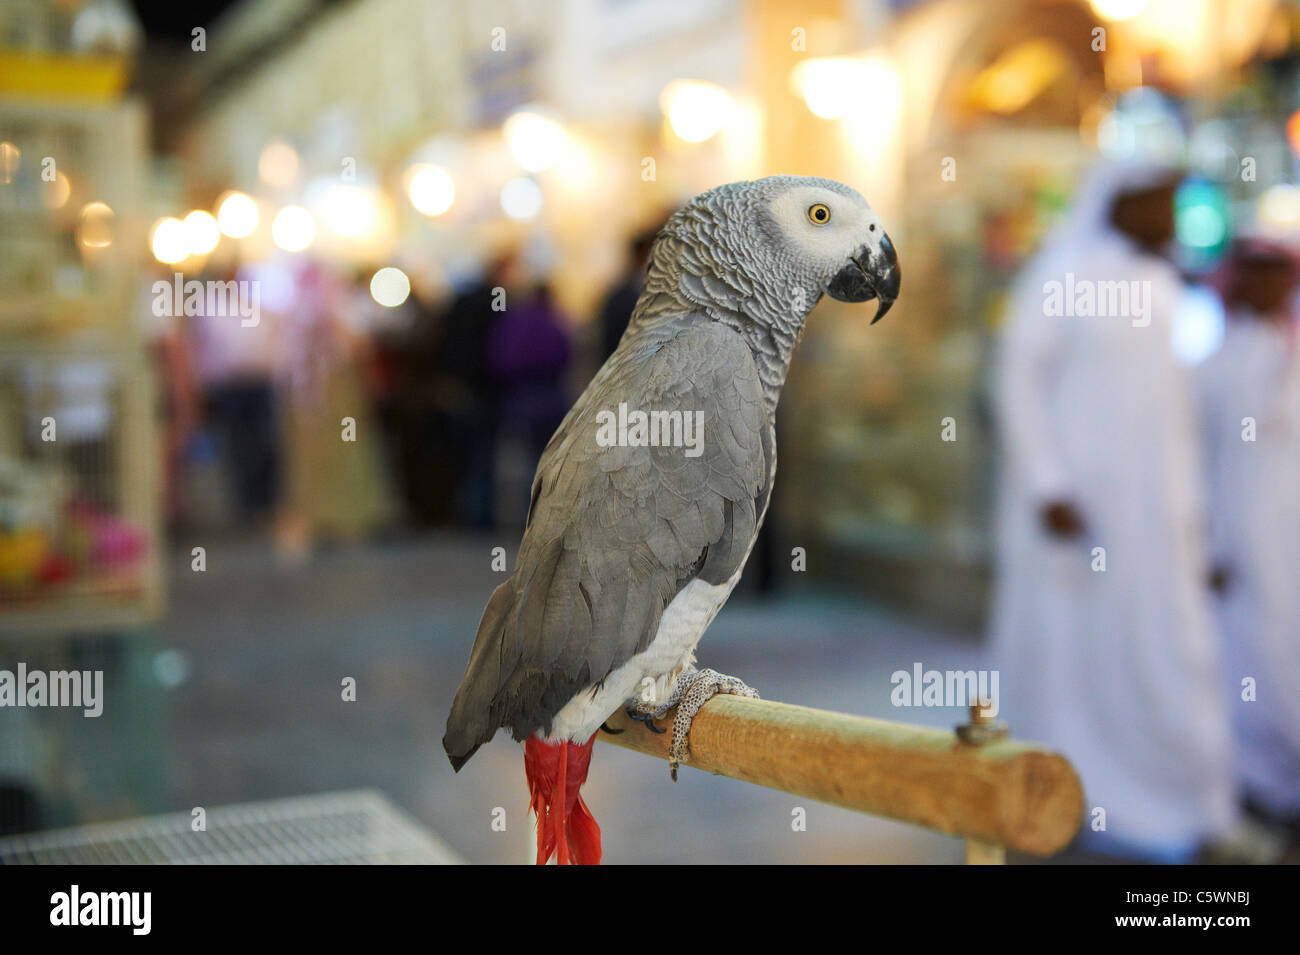 grey parrot bird souk waqif doha qatar middle east Stock Photo